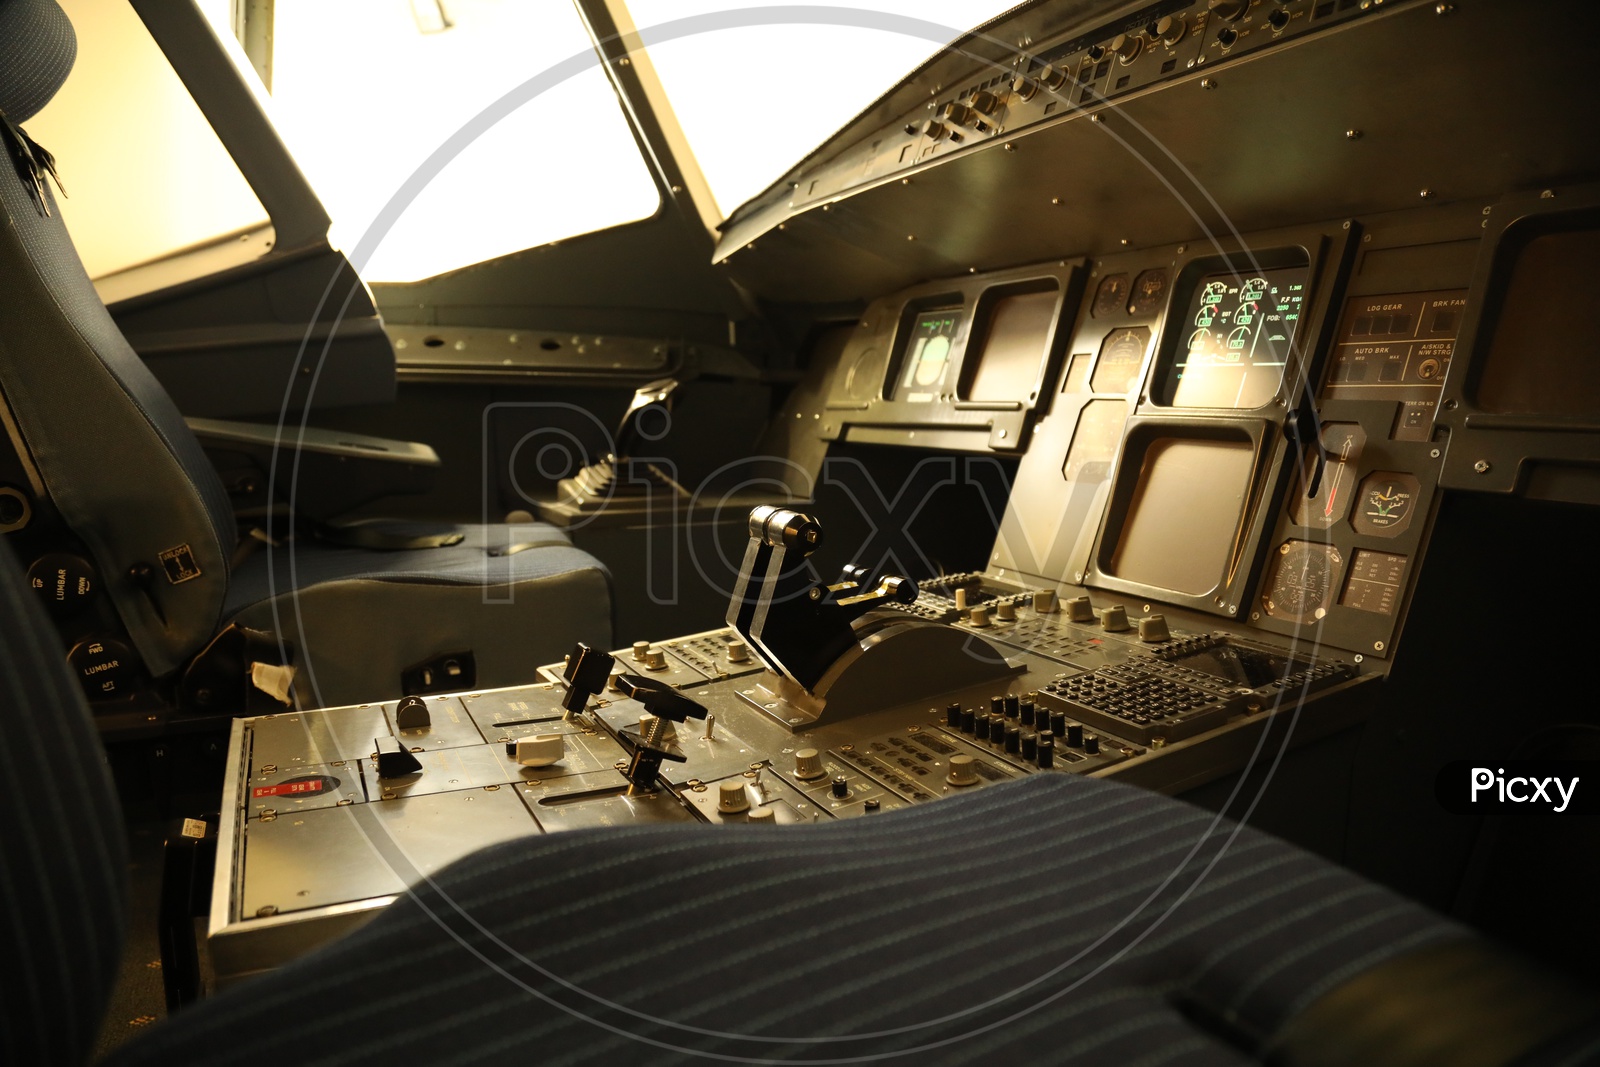 Cockpit Area of an Aeroplane